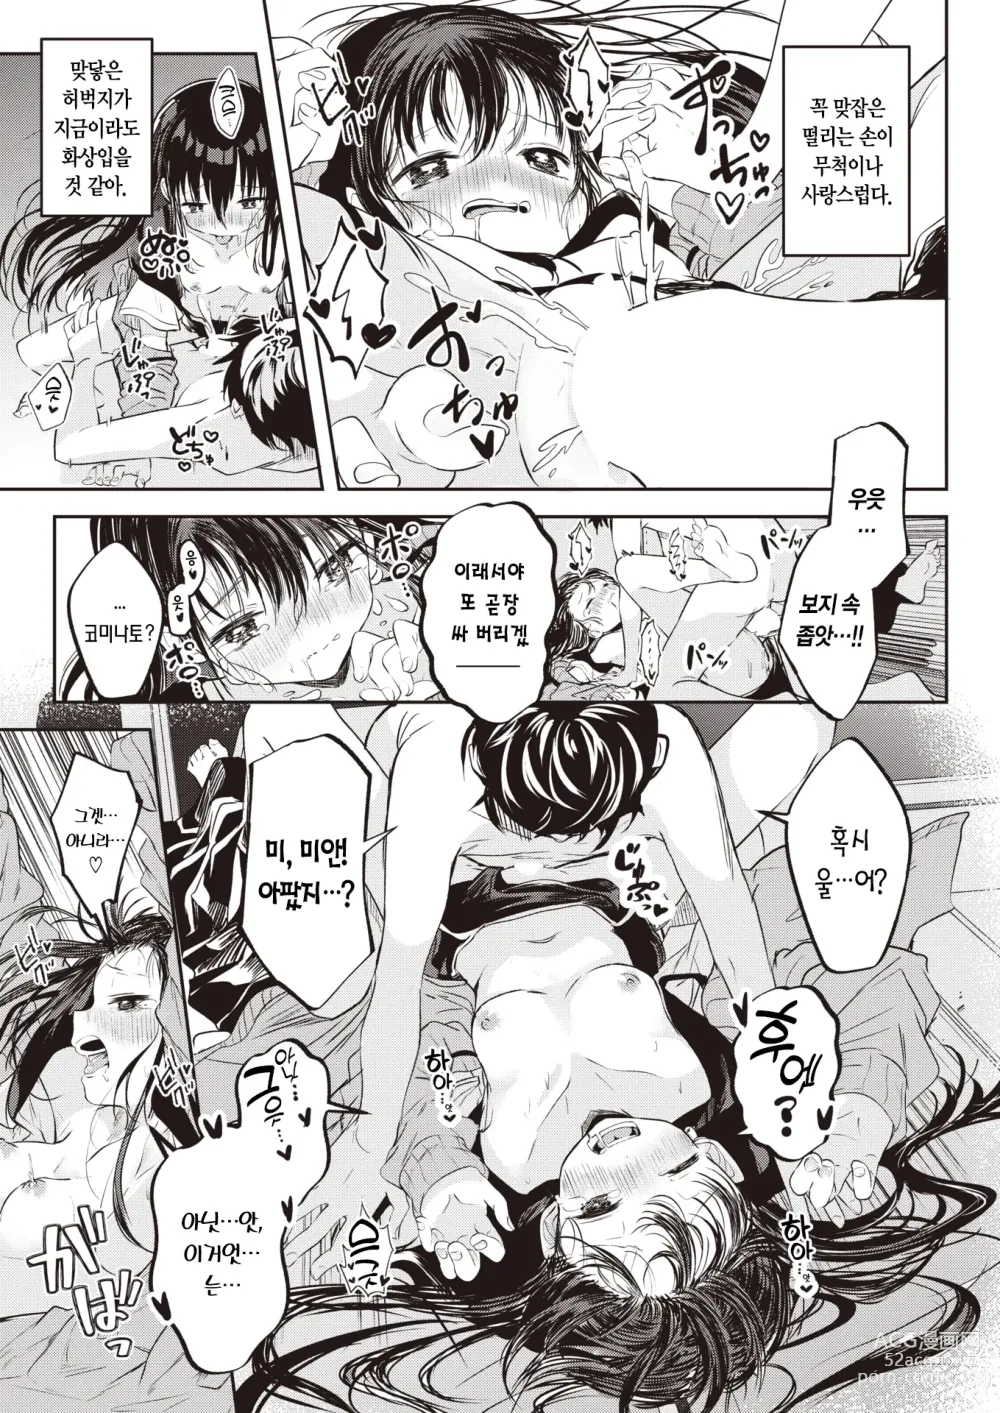 Page 22 of manga 처녀의 미열은 양열지극.